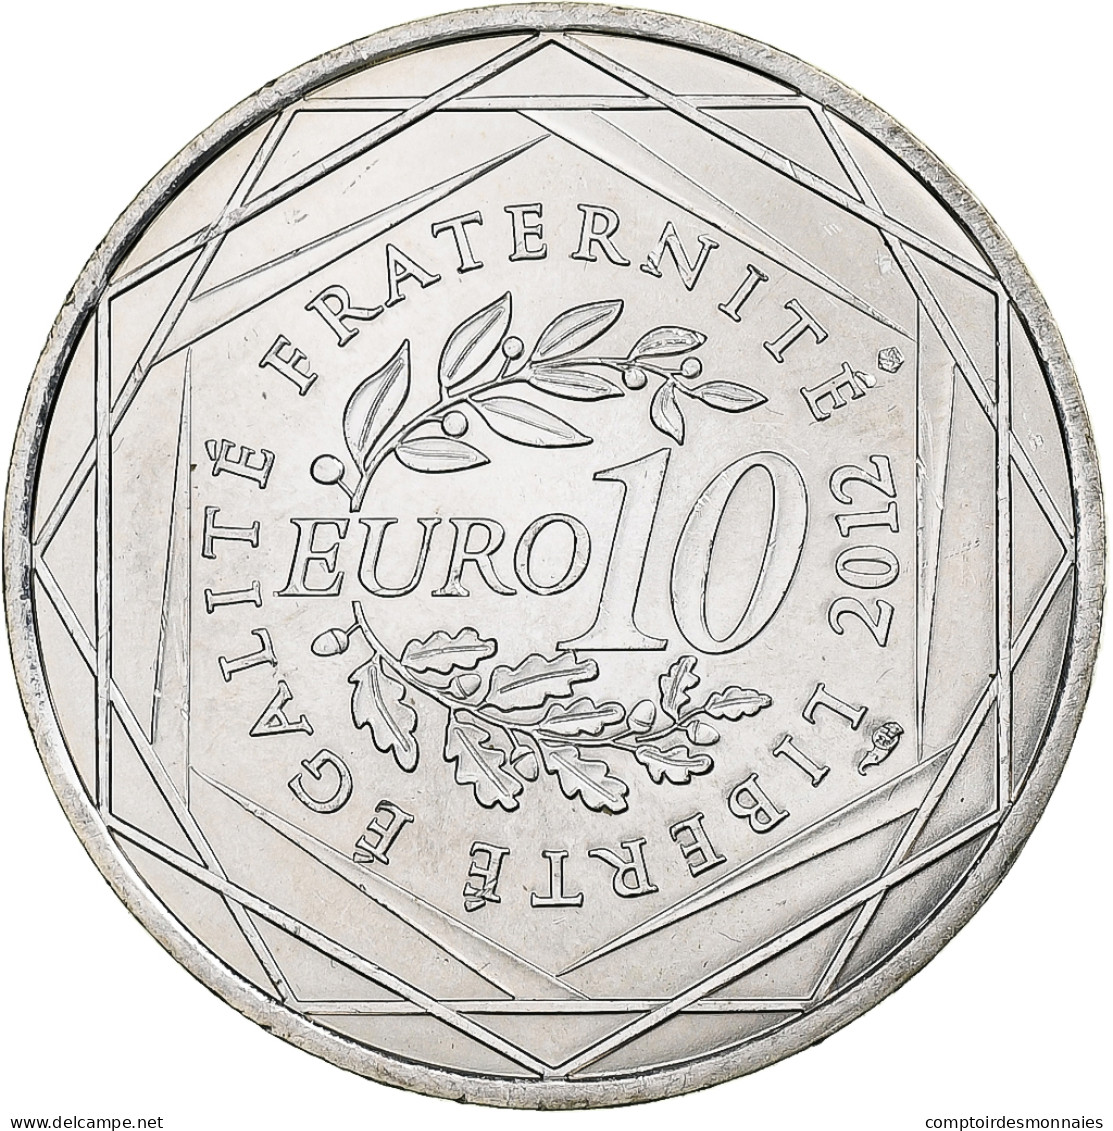 France, 10 Euro, Picardie, 2012, MDP, Argent, SPL - France